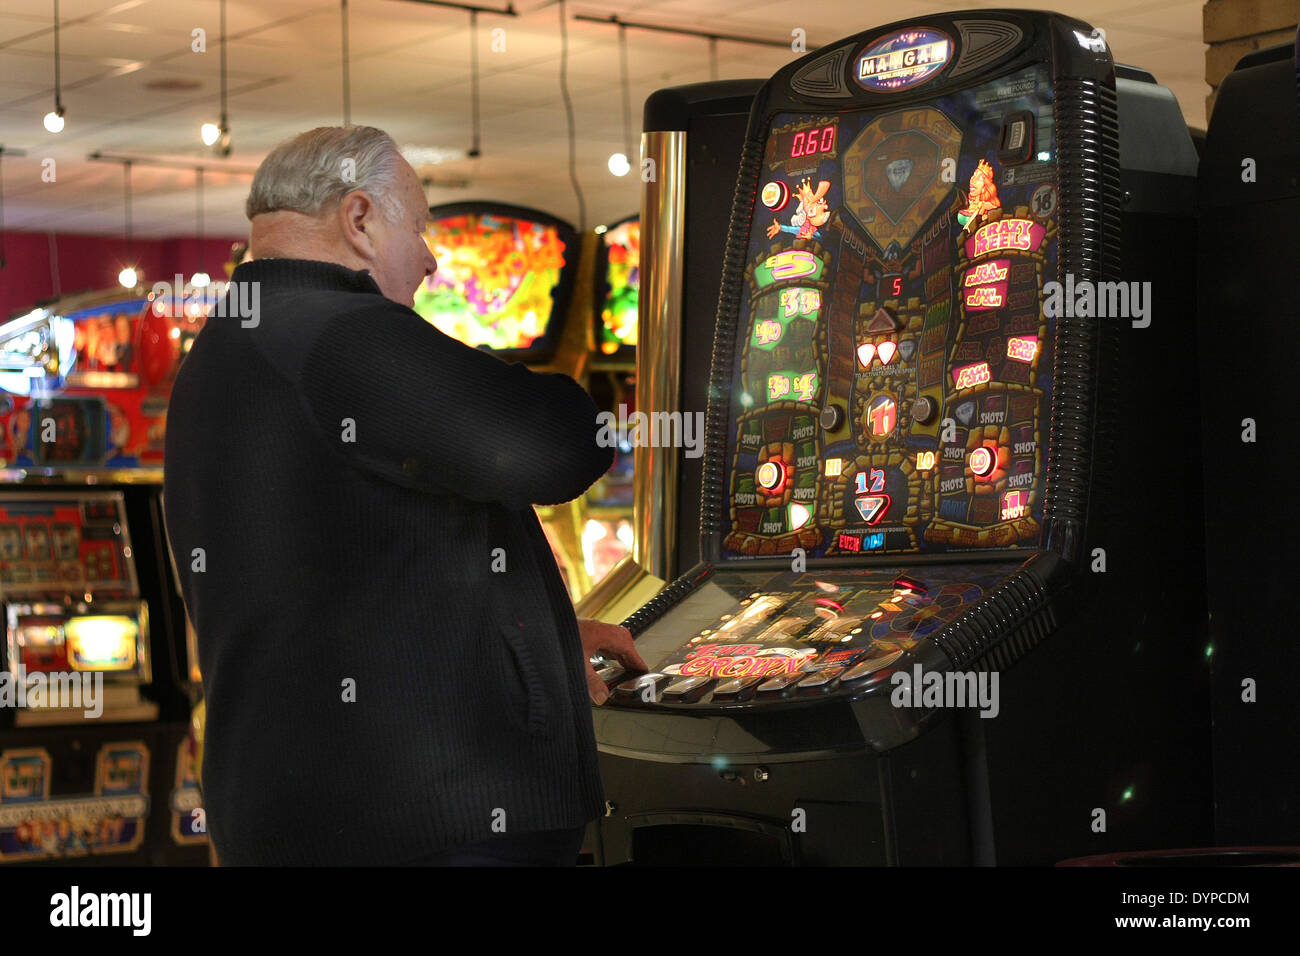 Man betting on gambling machine in amusement arcade. Stock Photo